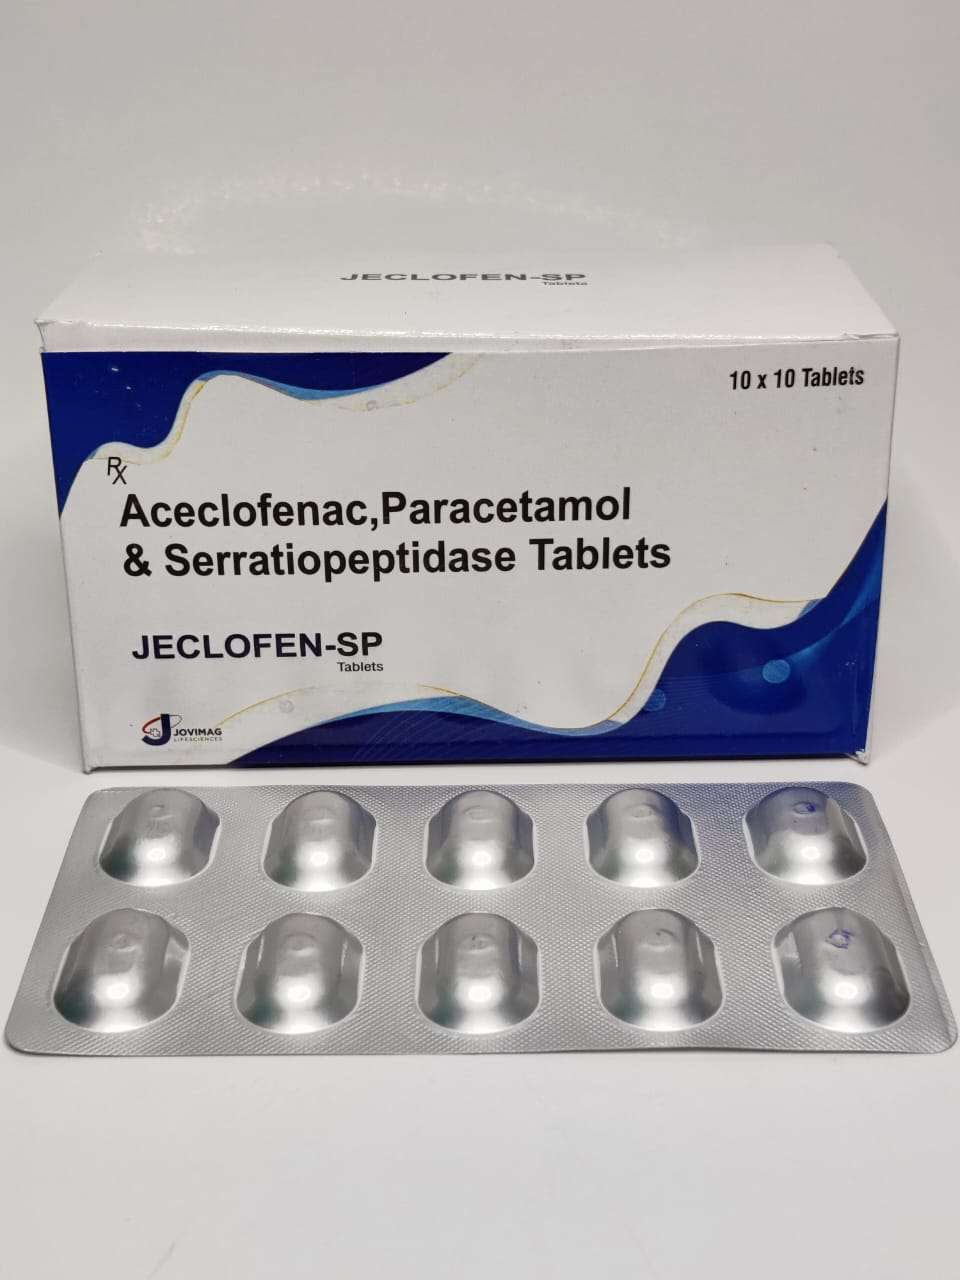 aceclofenac 100mg+paracetamol 325mg+serratiopeptidase 15mg